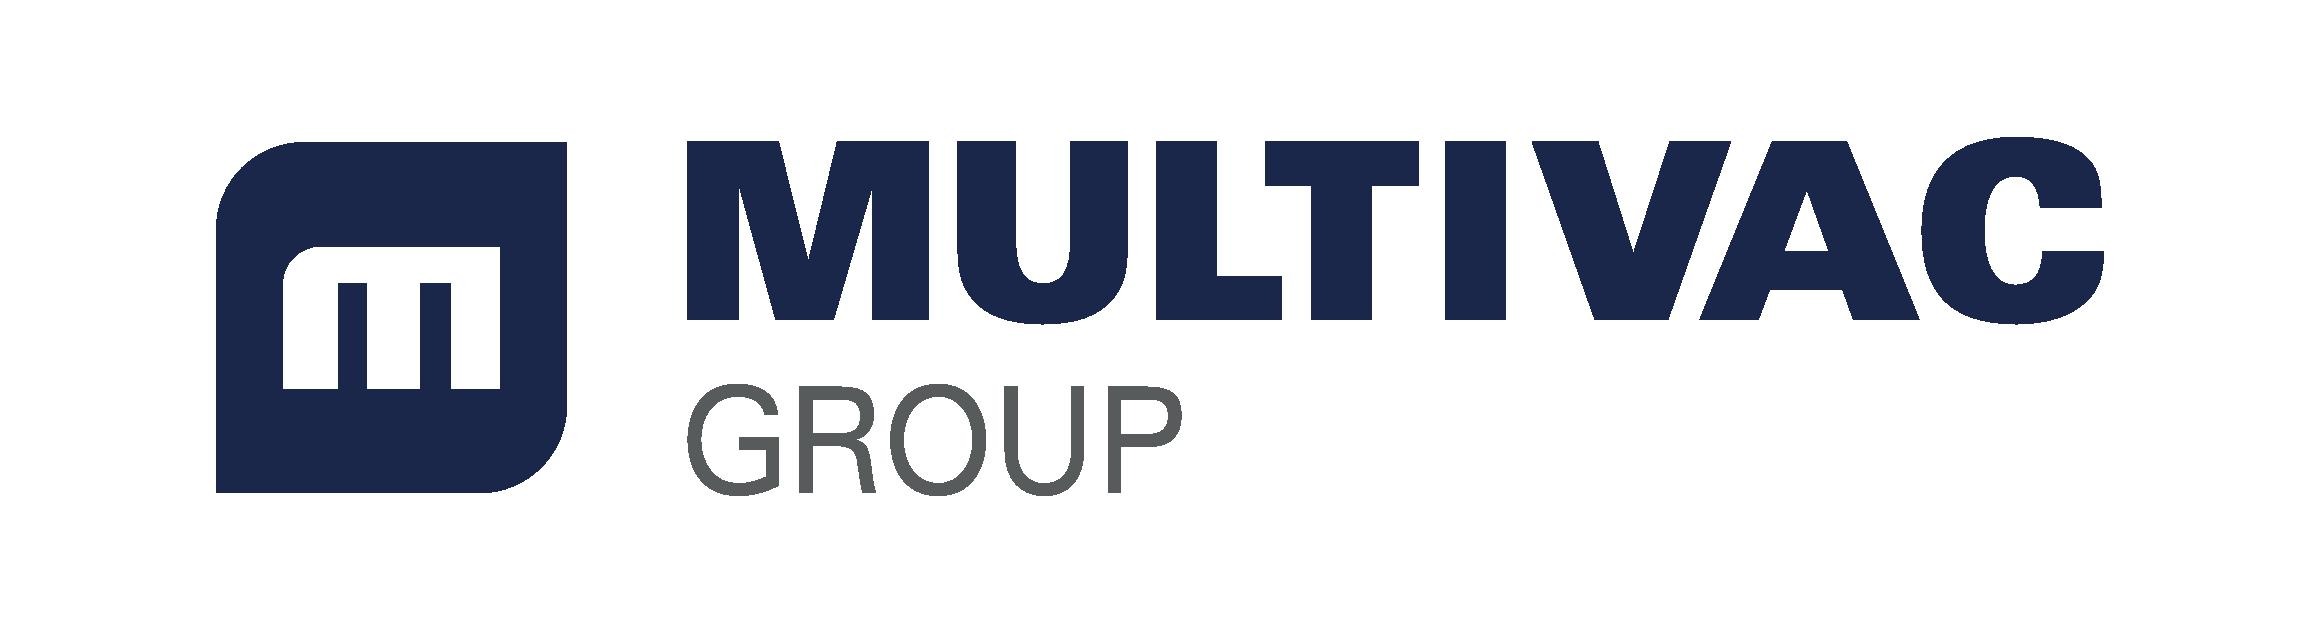 multivac-logo-v1-0-logo-group-4c-002